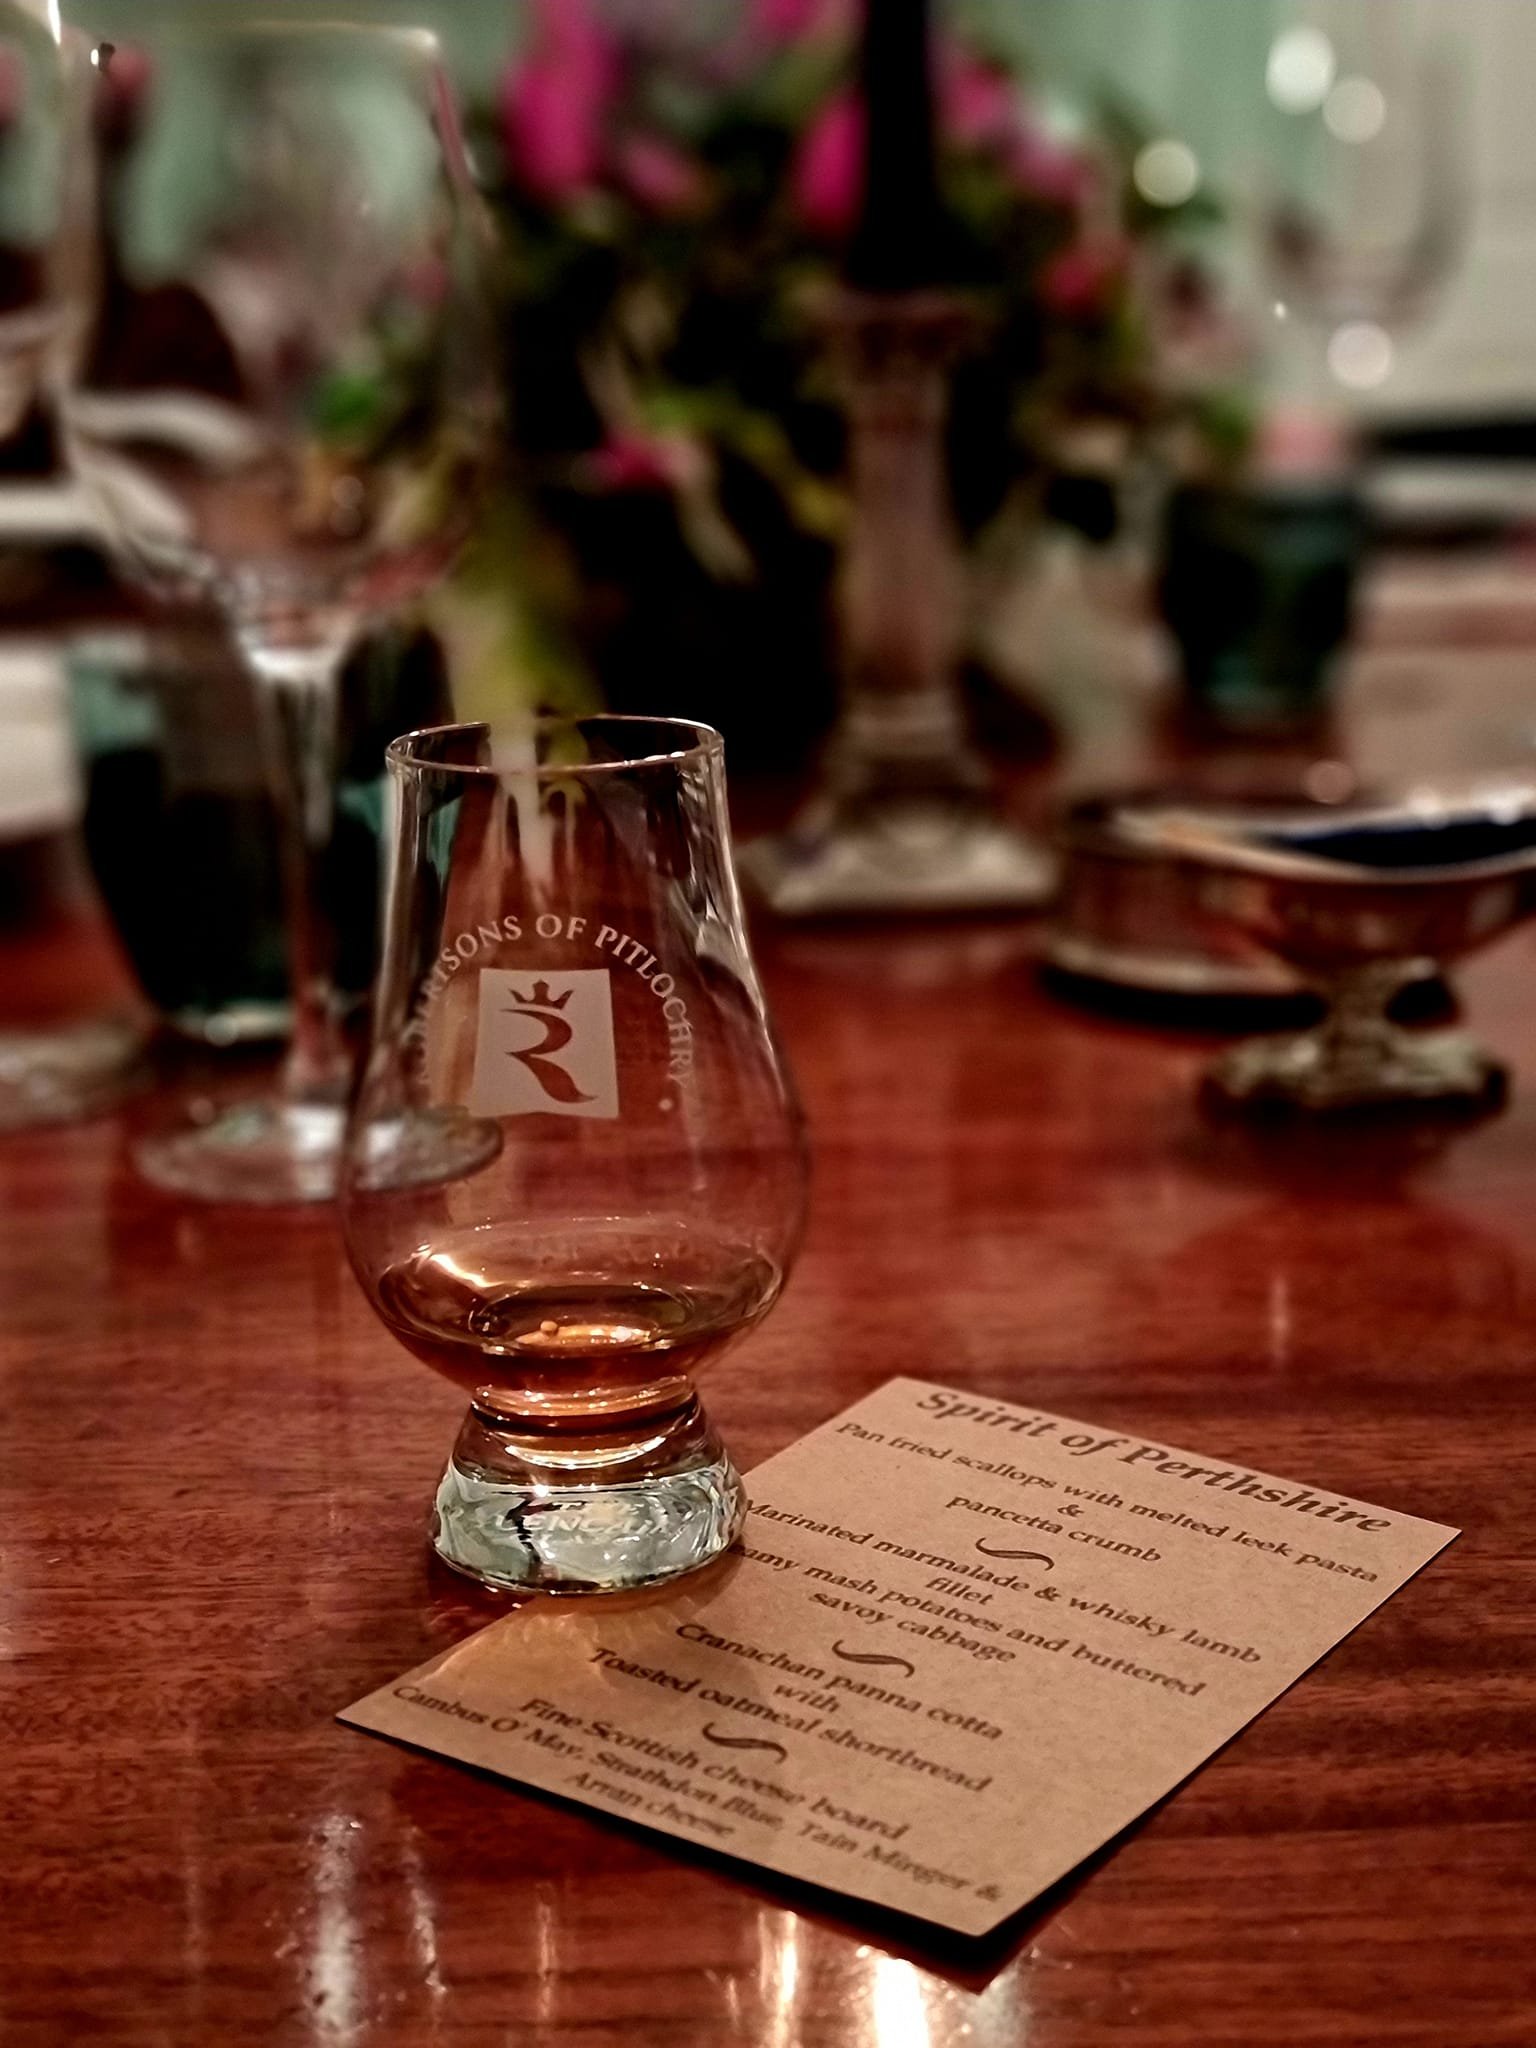 Straloch whisky dinner whisky and menu.jpg